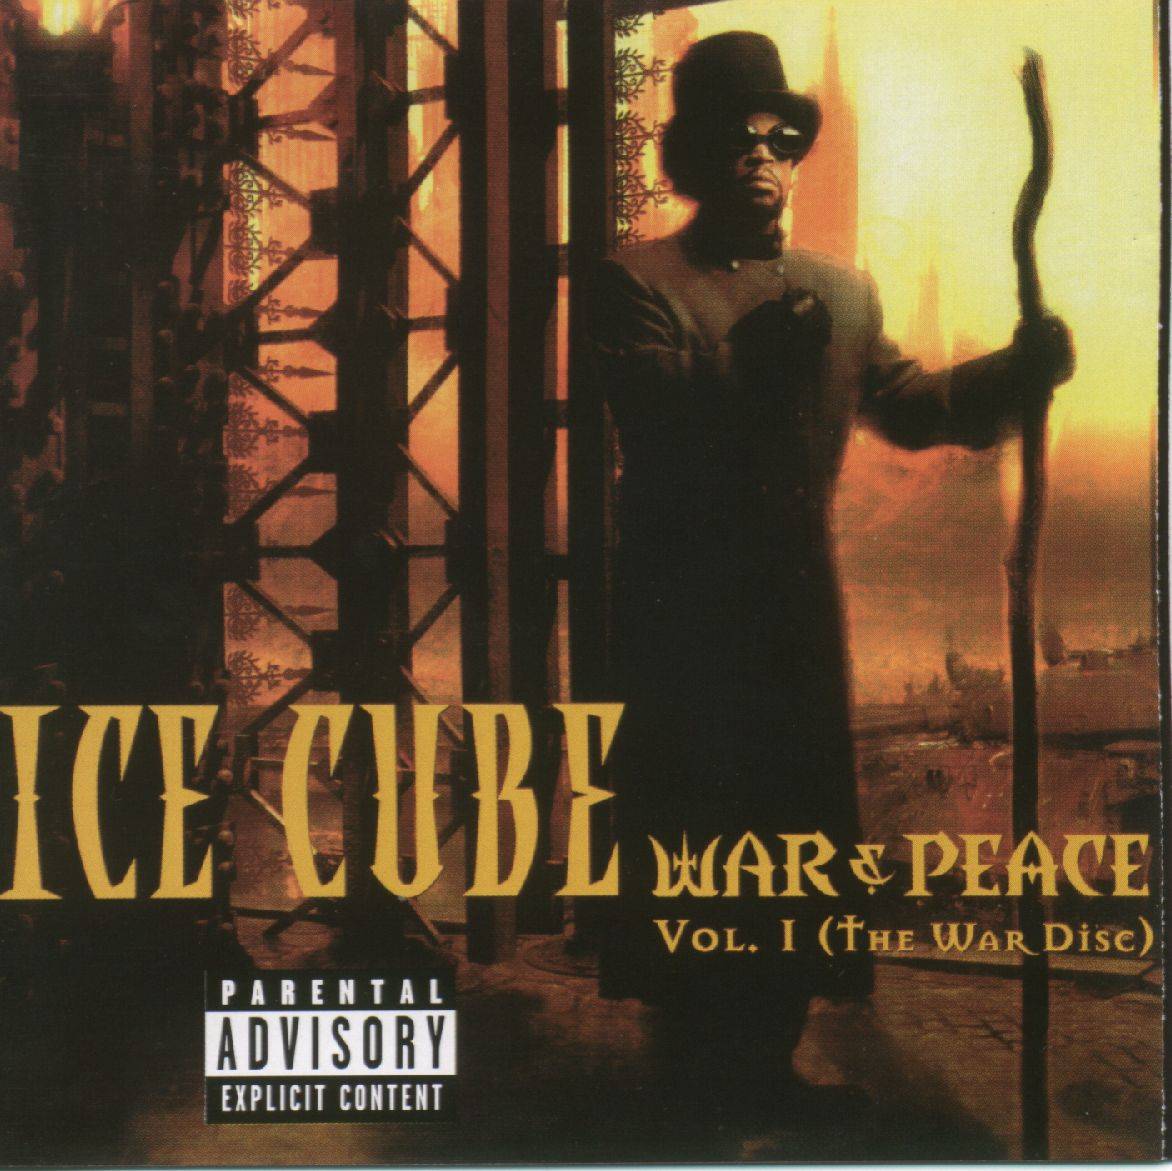 ICE CUBE - WAR & PEACE VOL.1 / THE WAR DISE